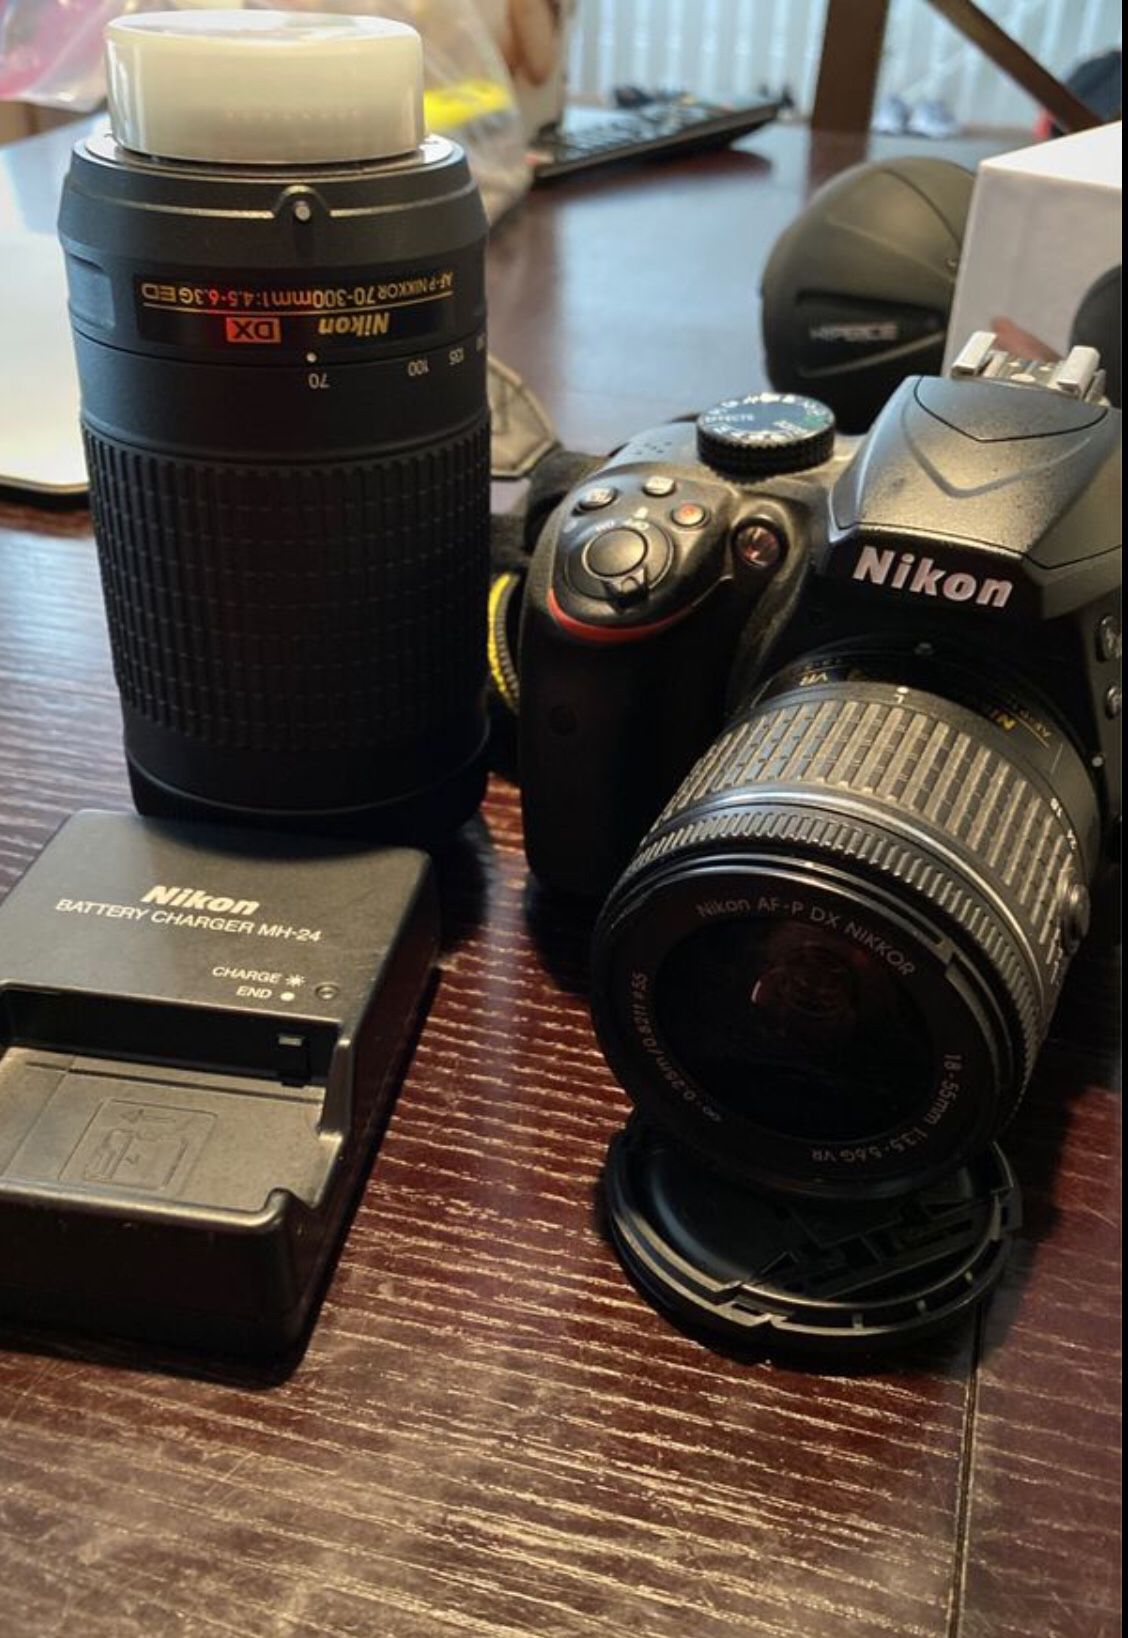 Nikon D3400 with two lenses